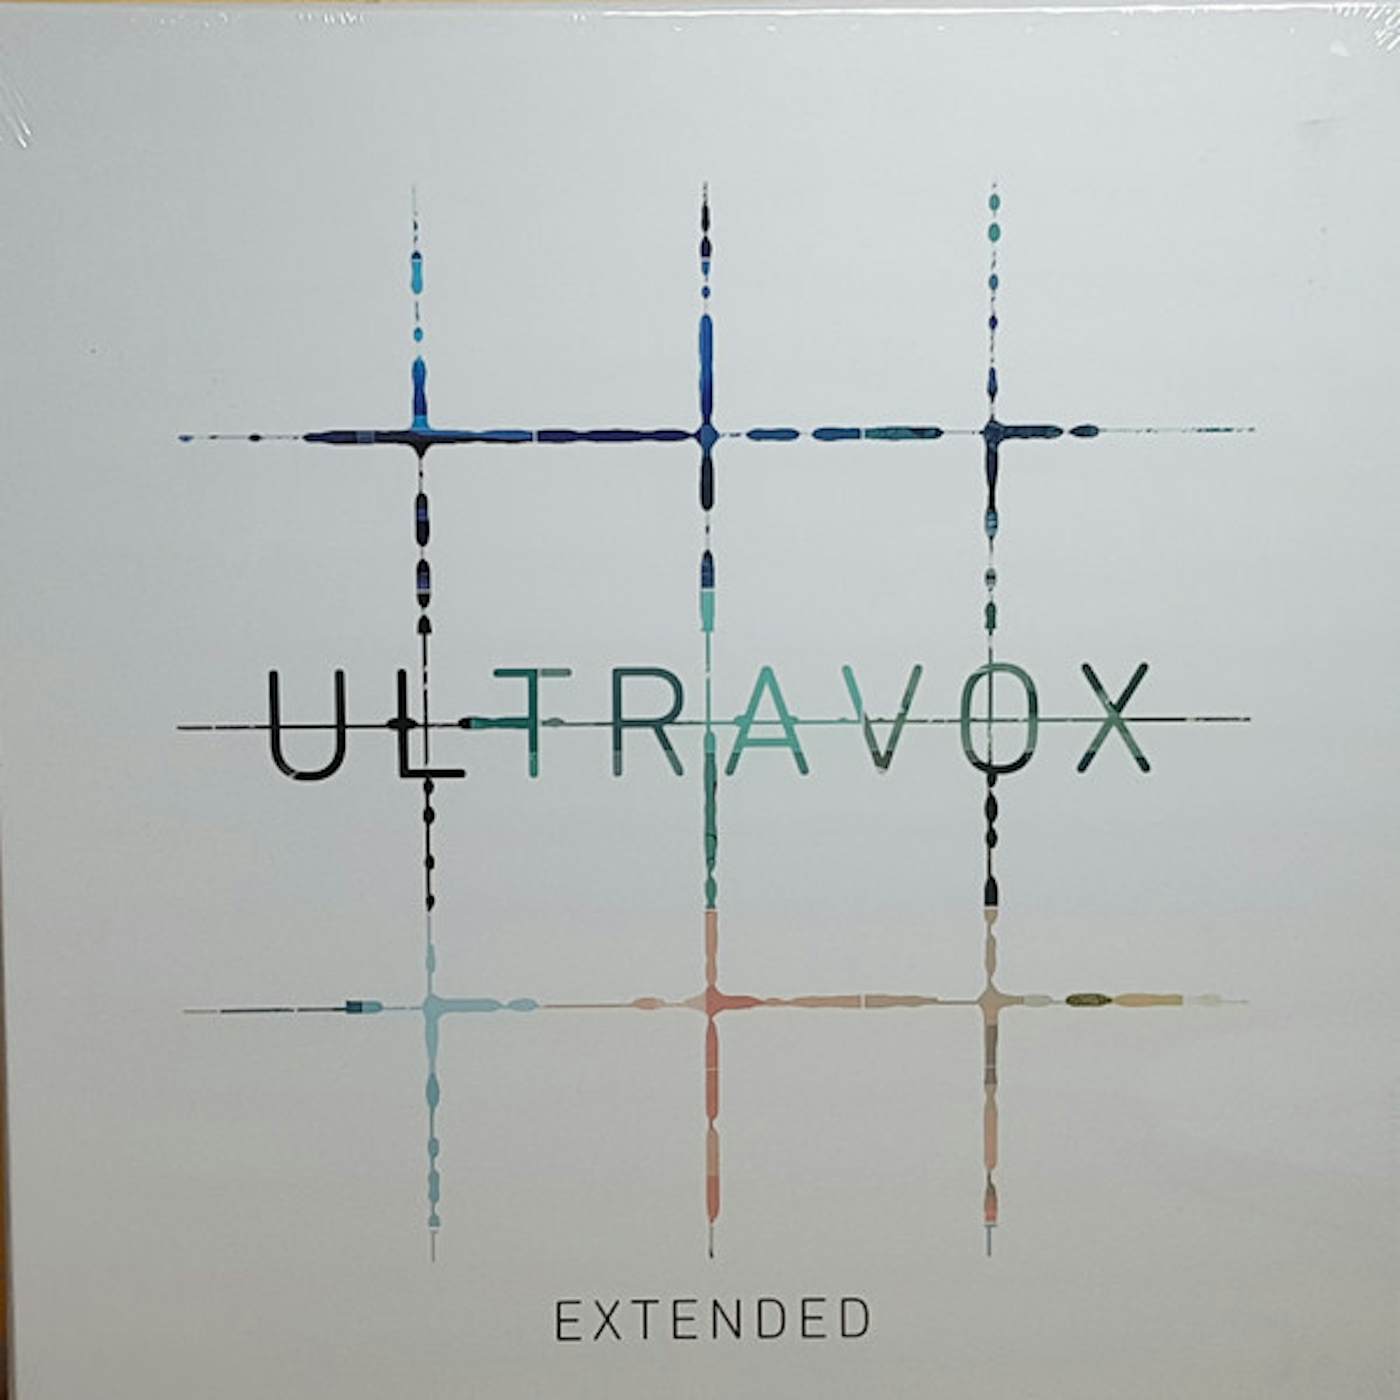 Ultravox EXTENDED Vinyl Record